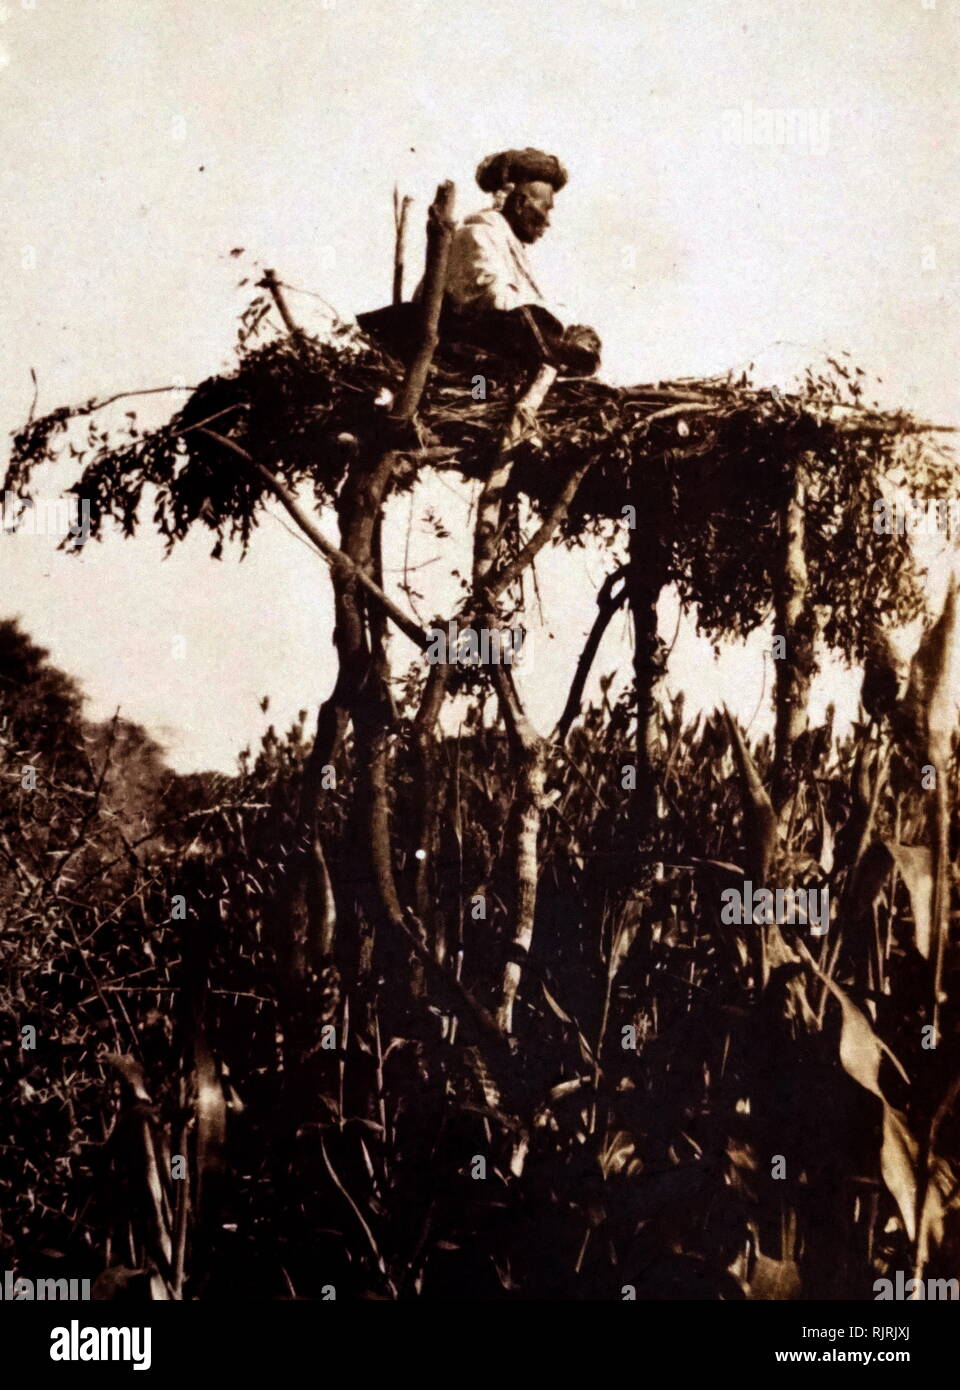 village Chowkidar (night watchman), in a tree, in an Indian rural village circa 1930 Stock Photo